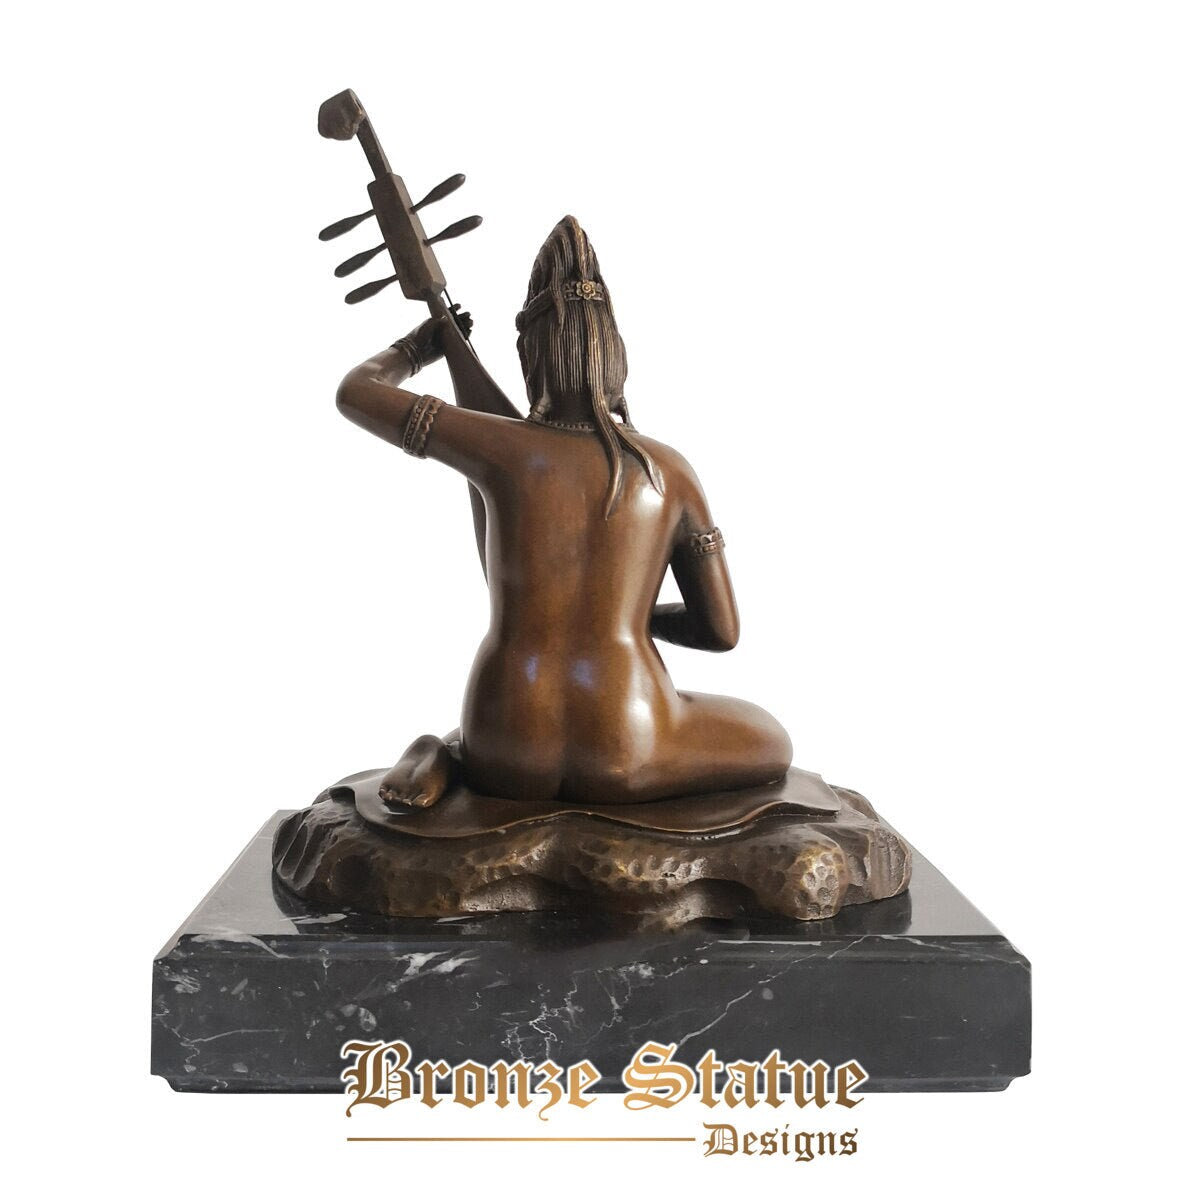 Bronze saraswati sculpture hindu mythology wisdom wealth goddess india buddha figurine statue art for business gift